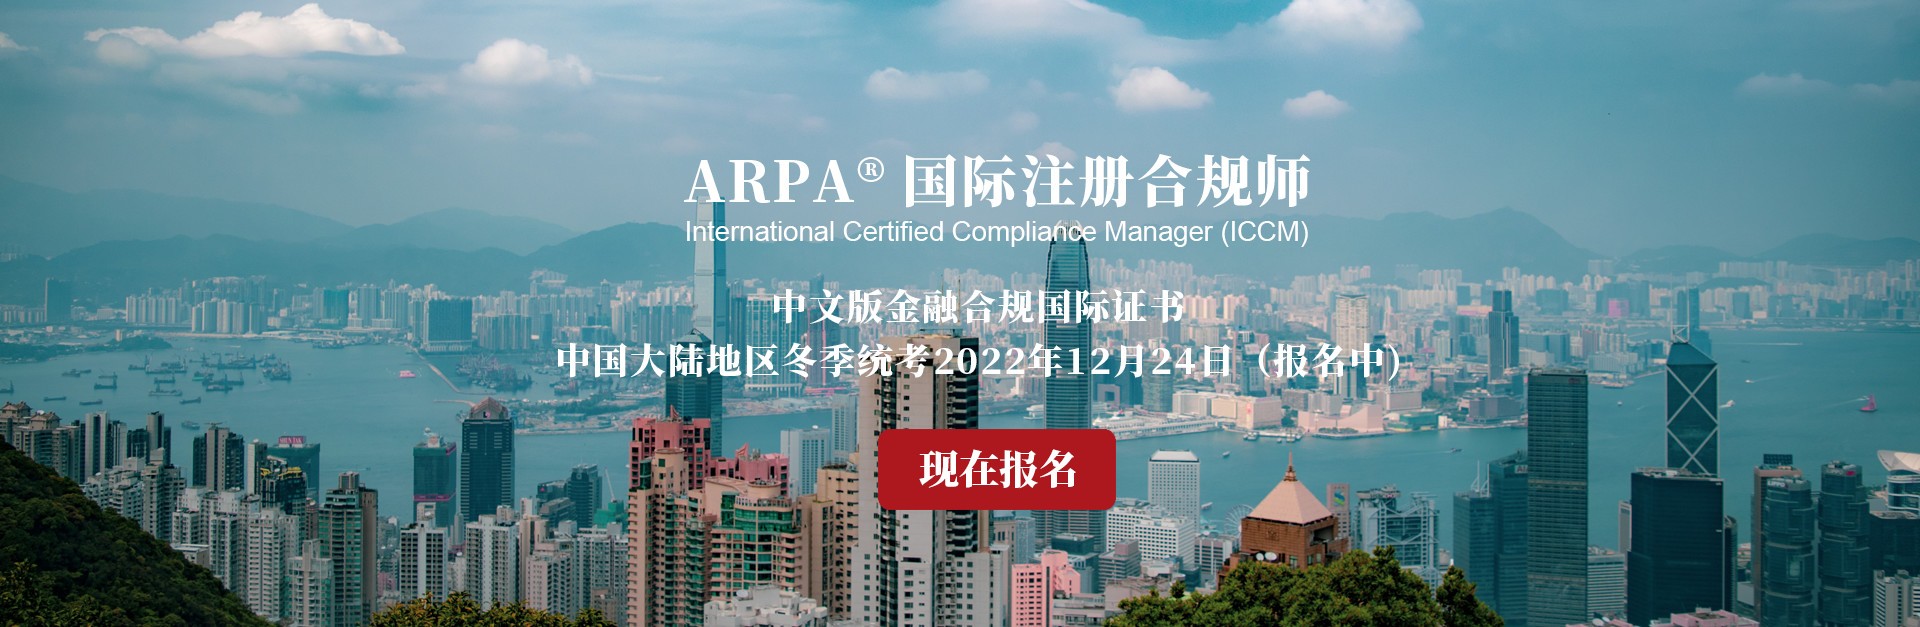 ARPA国际注册合规师1